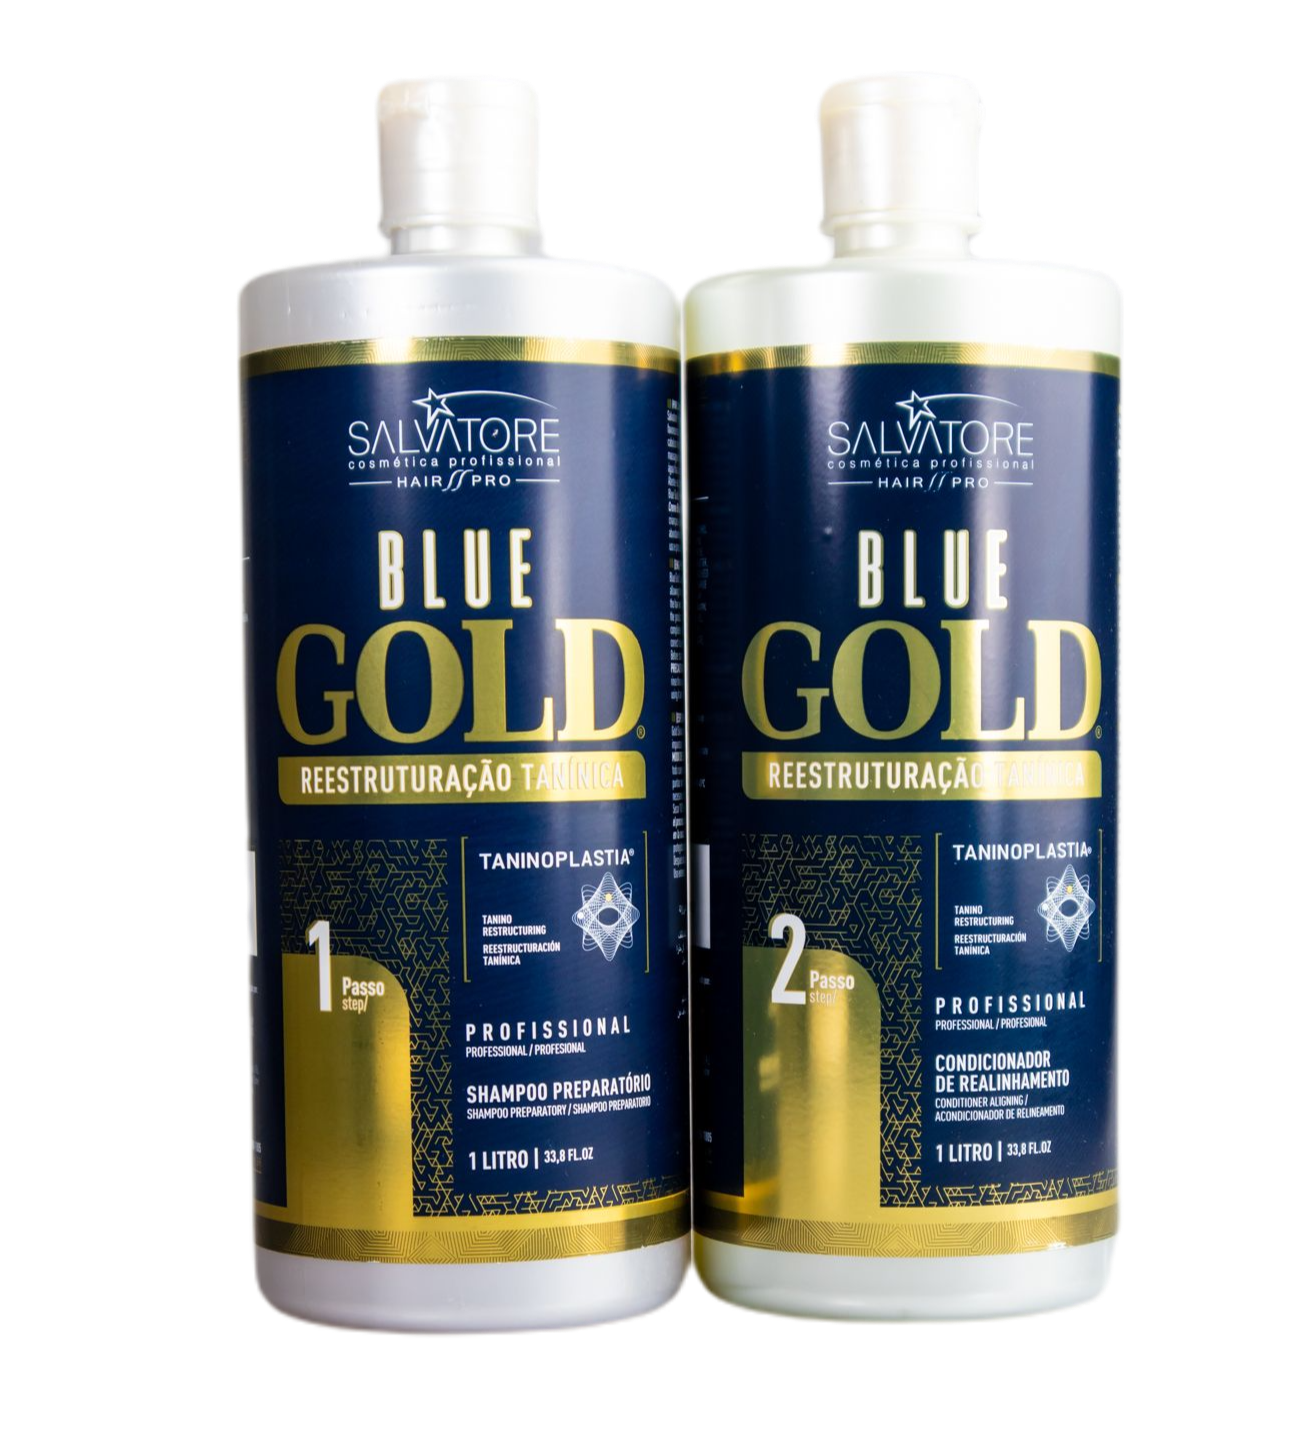 Salvatore Brazilian Keratin Treatment Blue Gold System Tanino Hair Restructuring Treatment Kit 2x1L - Salvatore